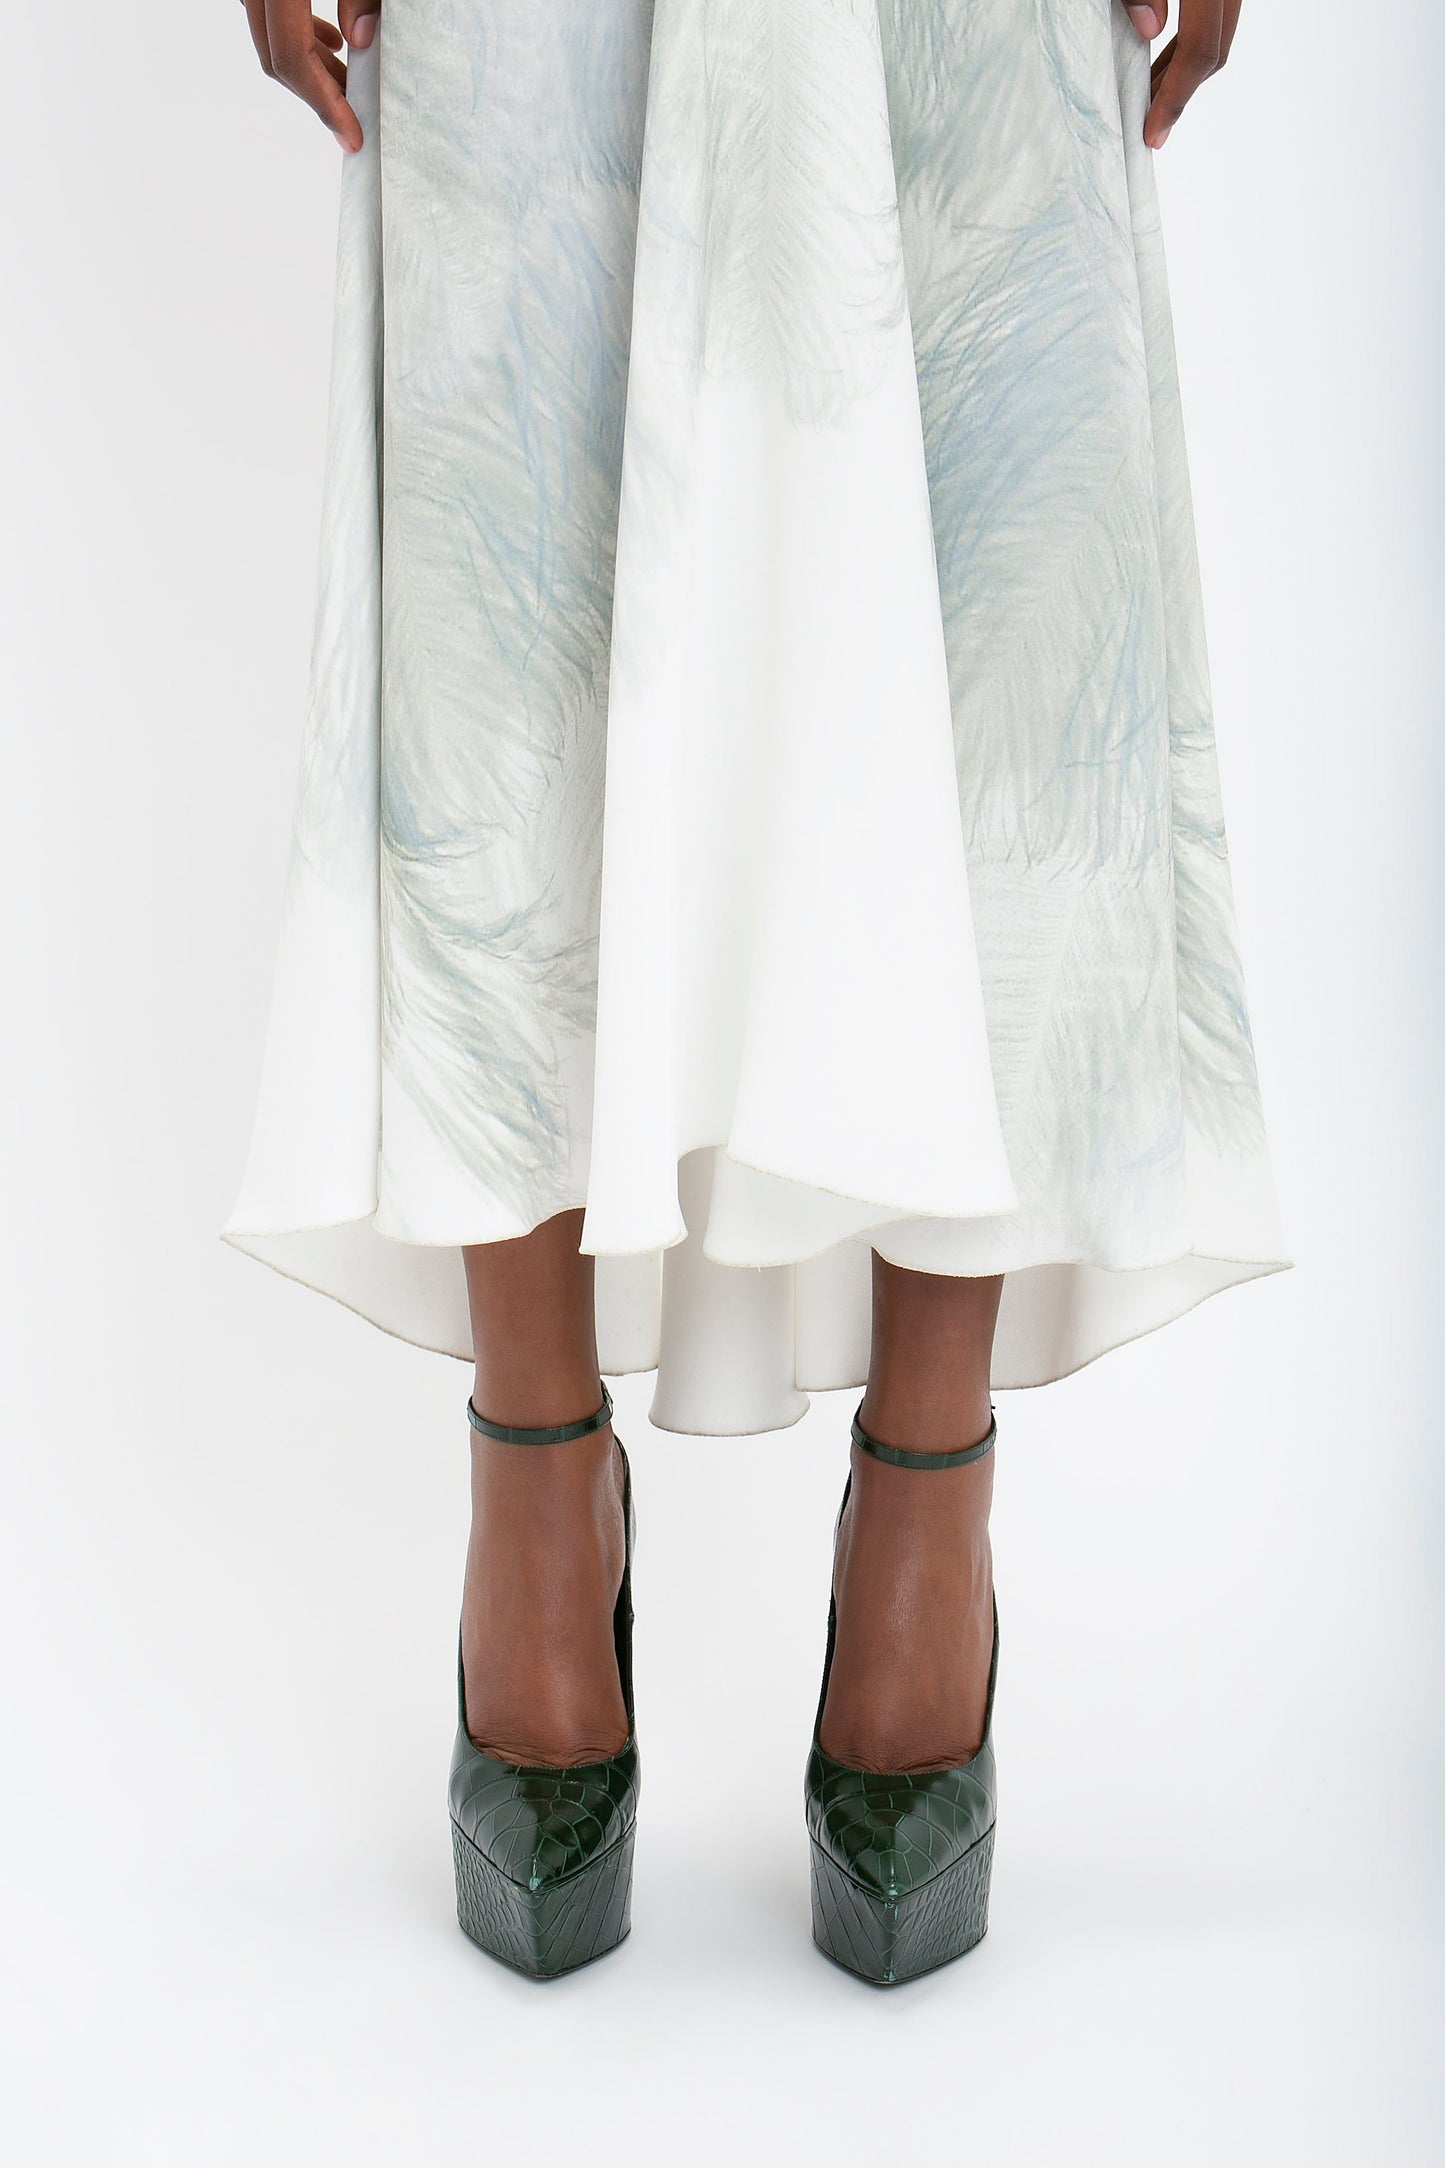 Drape Sleeve Midi Dress In White Digital Feather Print